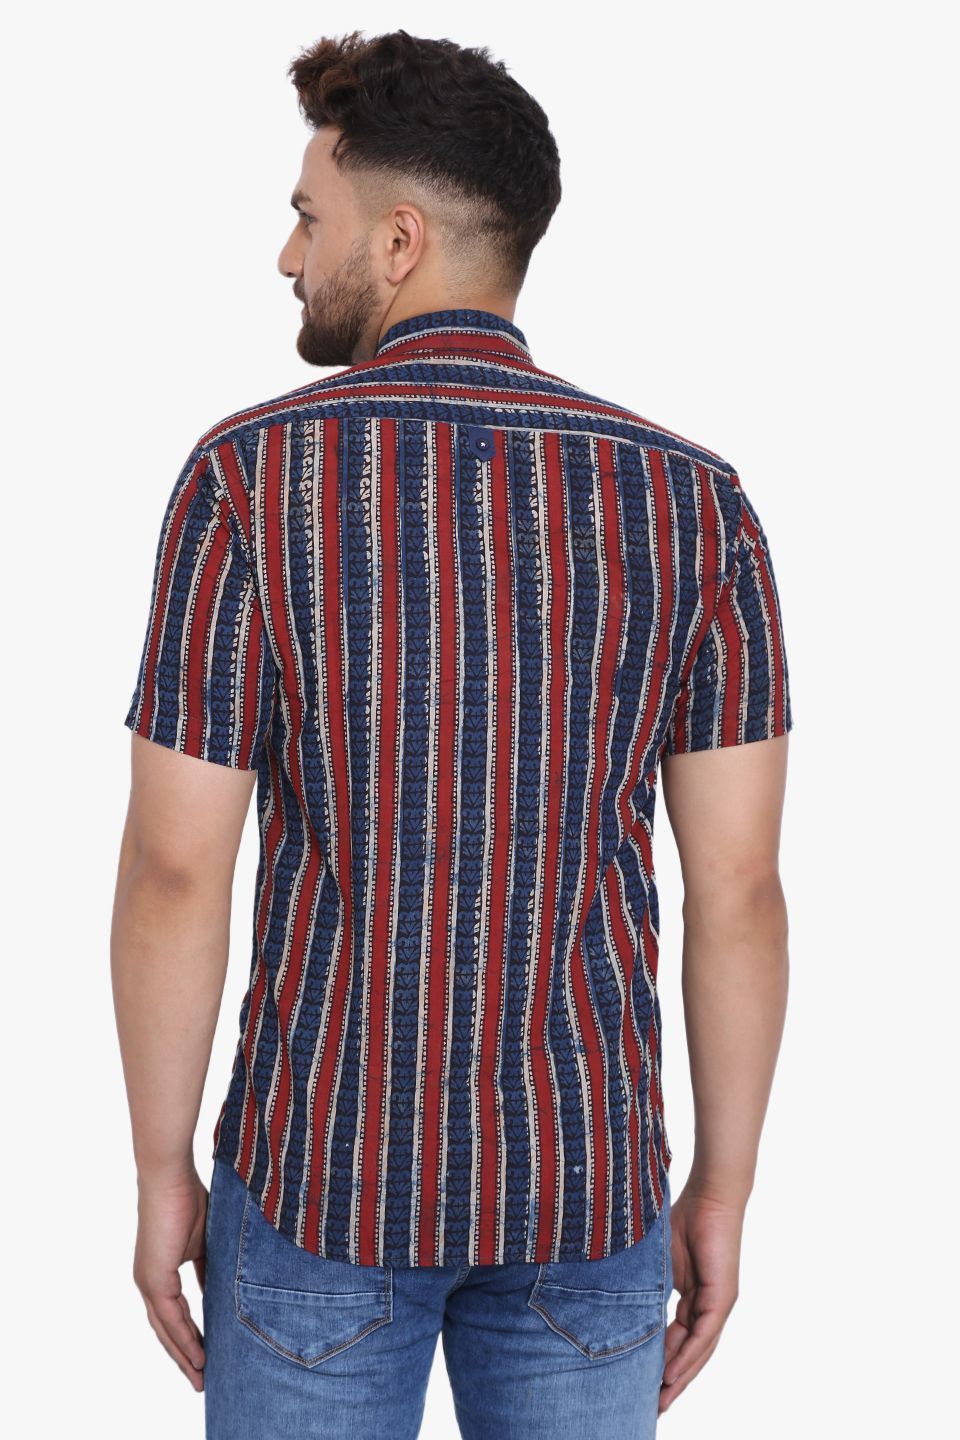 Jaipur 100% Cotton Multicolored Striped Shirt